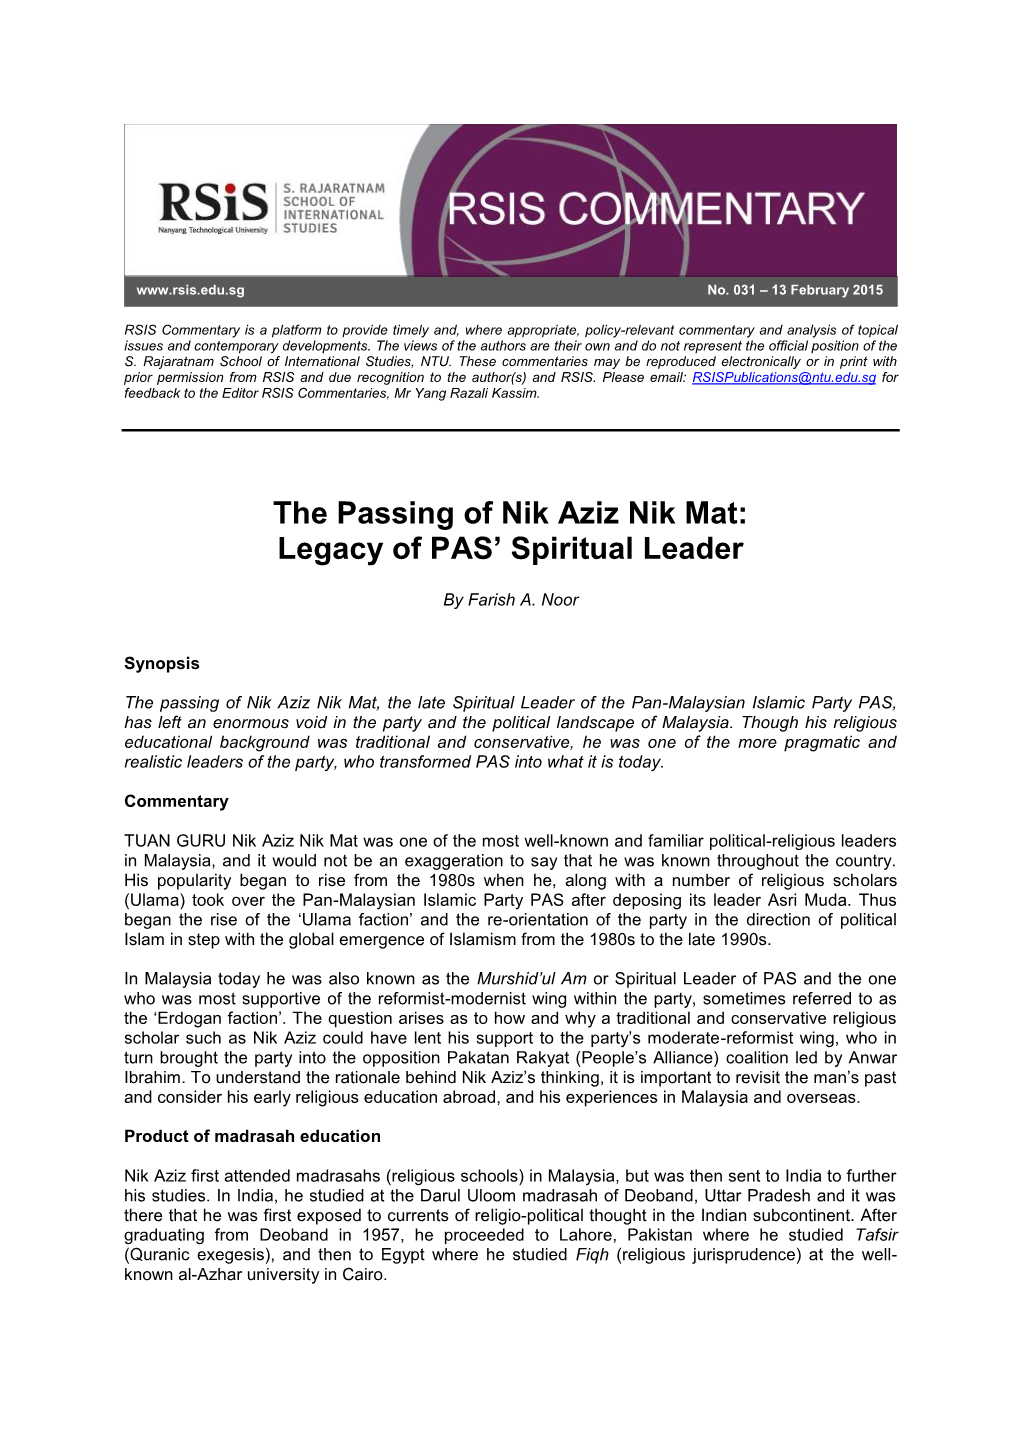 The Passing of Nik Aziz Nik Mat: Legacy of PAS’ Spiritual Leader